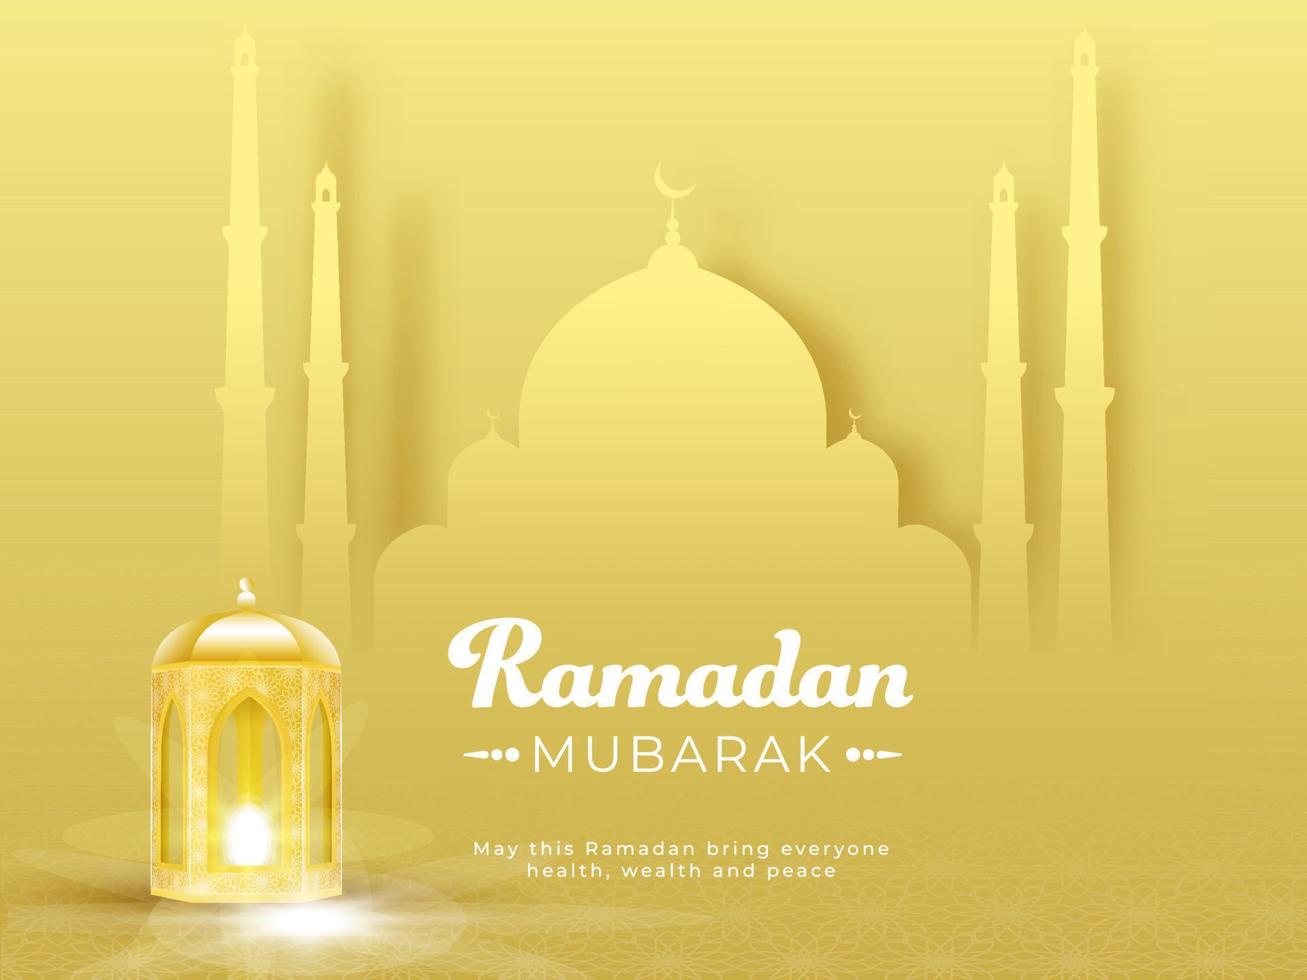 Islamic Holy Month of Ramadan Mubarak with Beautiful Paper Mosque and Illuminated Lantern on Yellow Background. vector